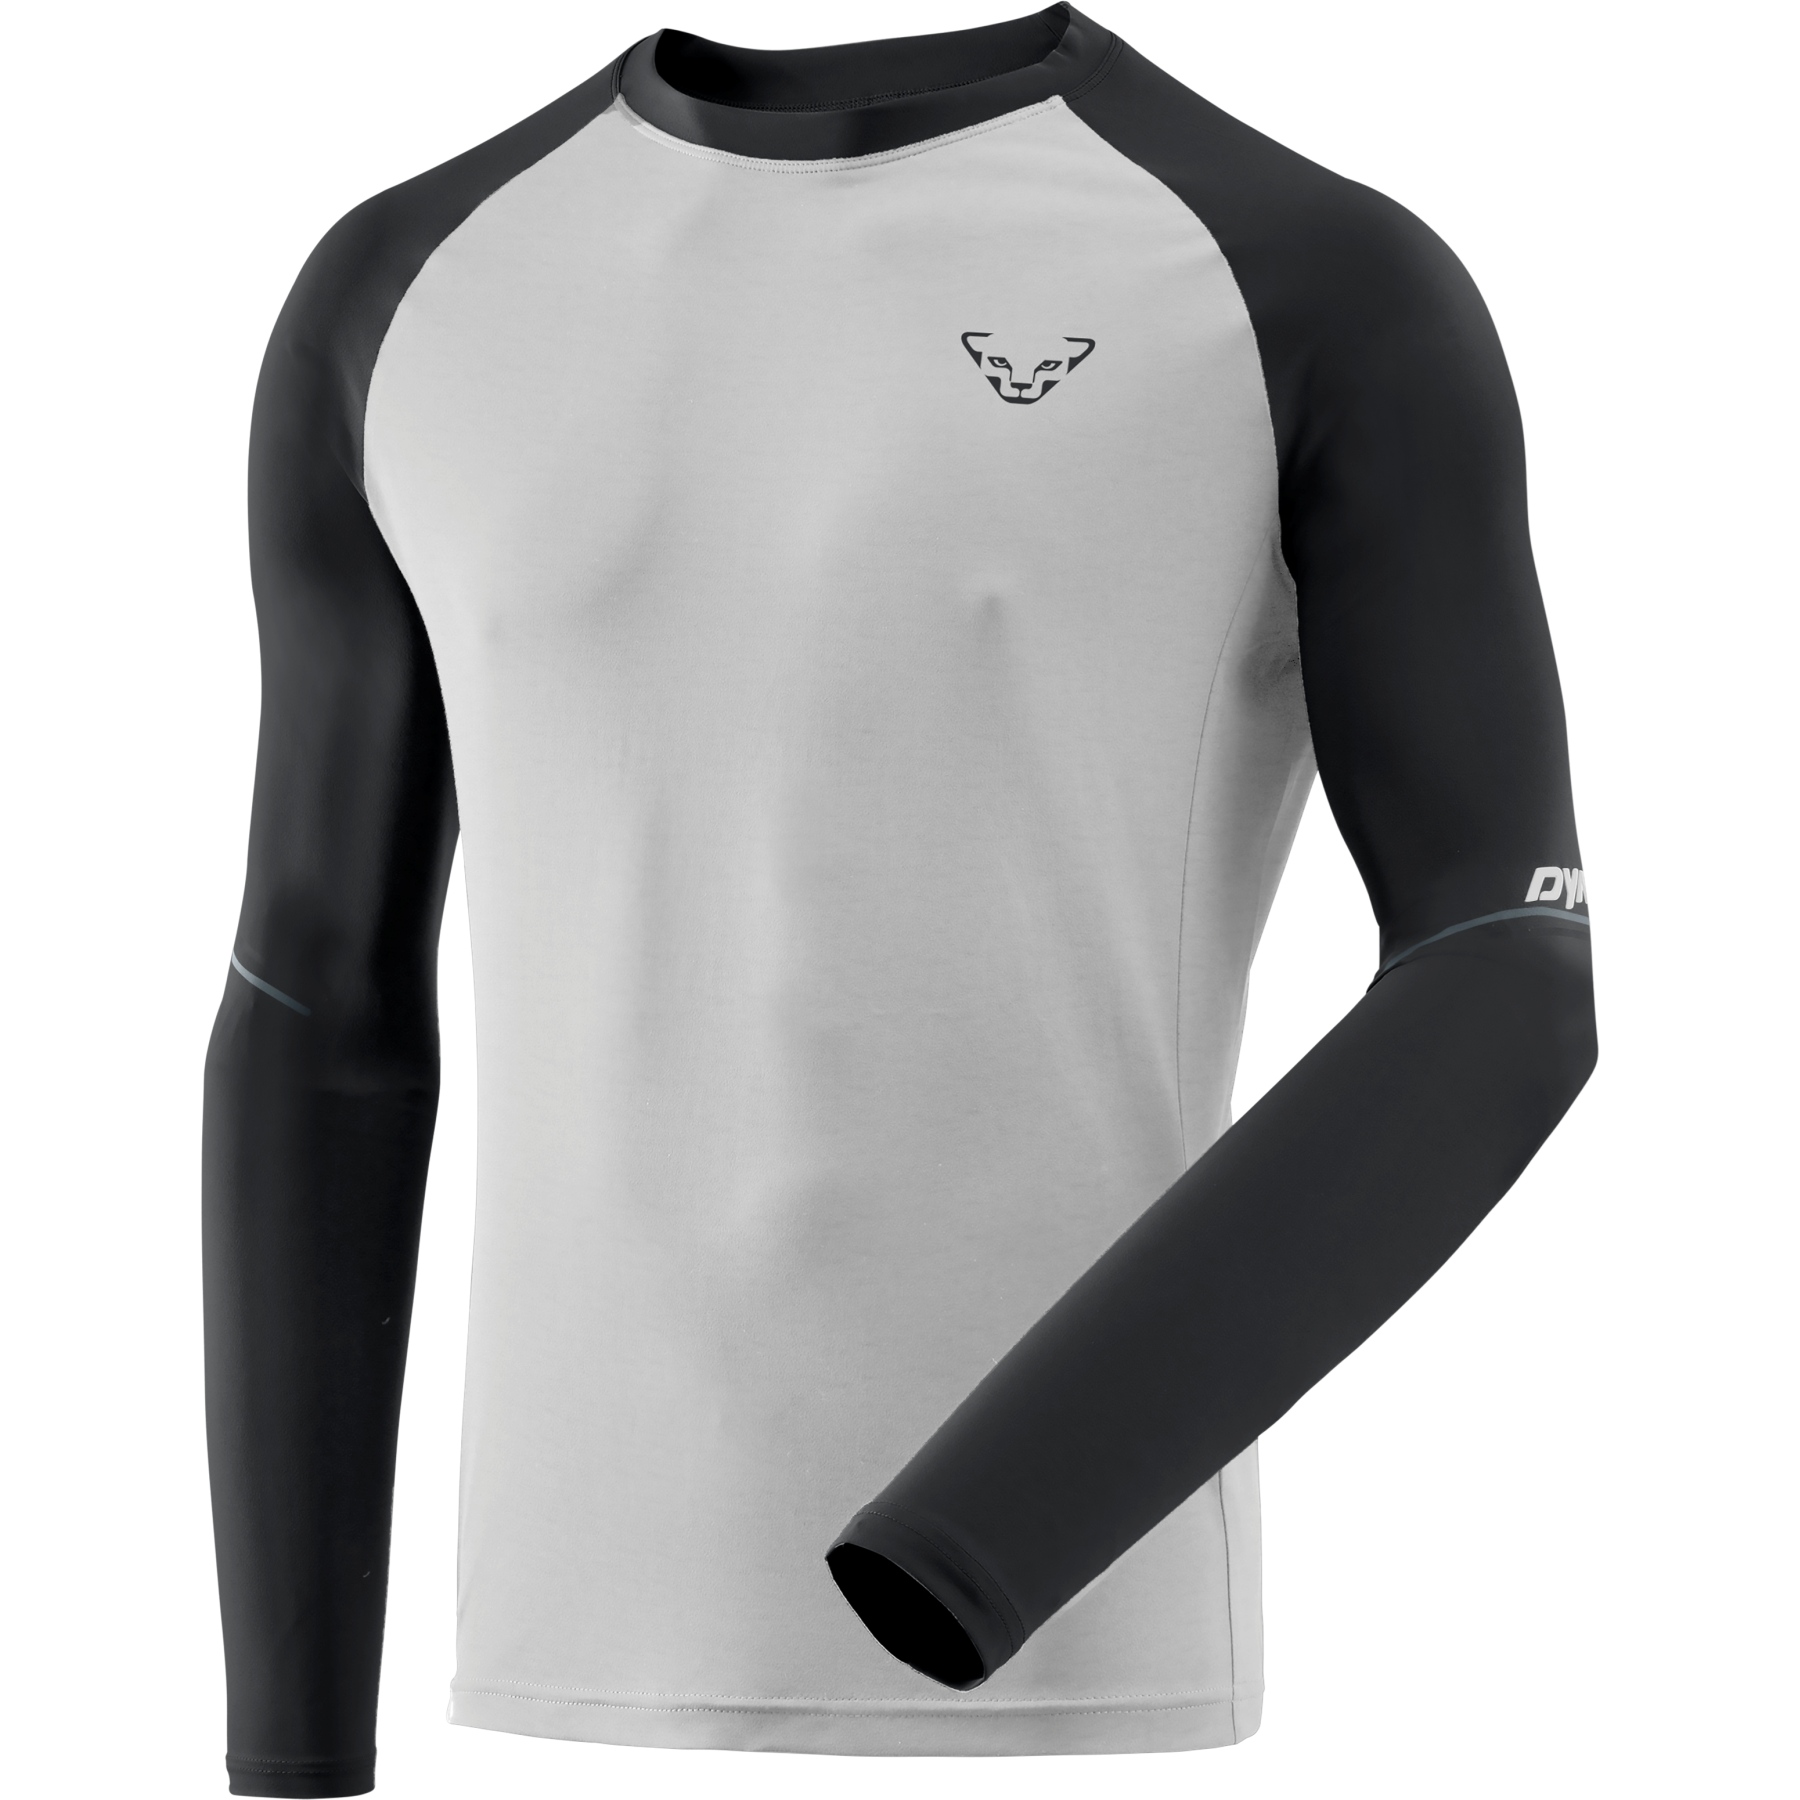 Productfoto van Dynafit Alpine Pro Shirt met Lange Mouwen Heren - Black Out